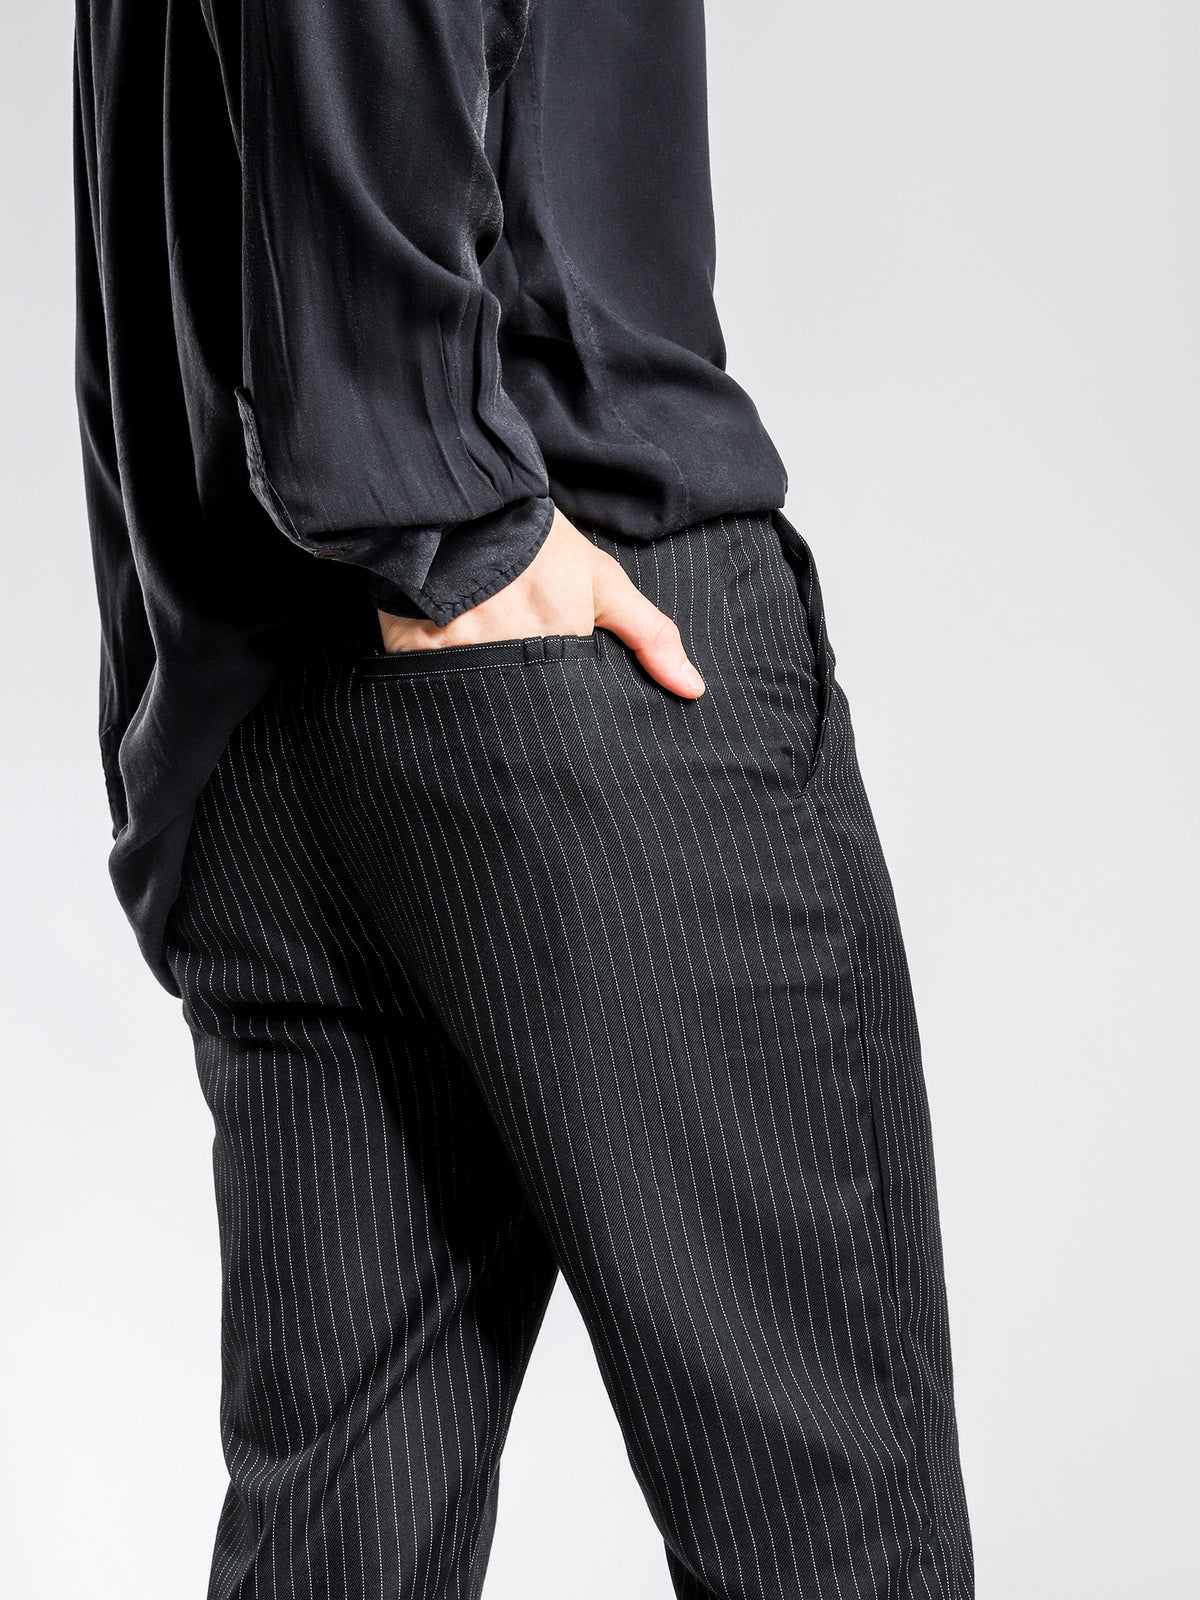 Vicious Pants in Black &amp; White Stripe